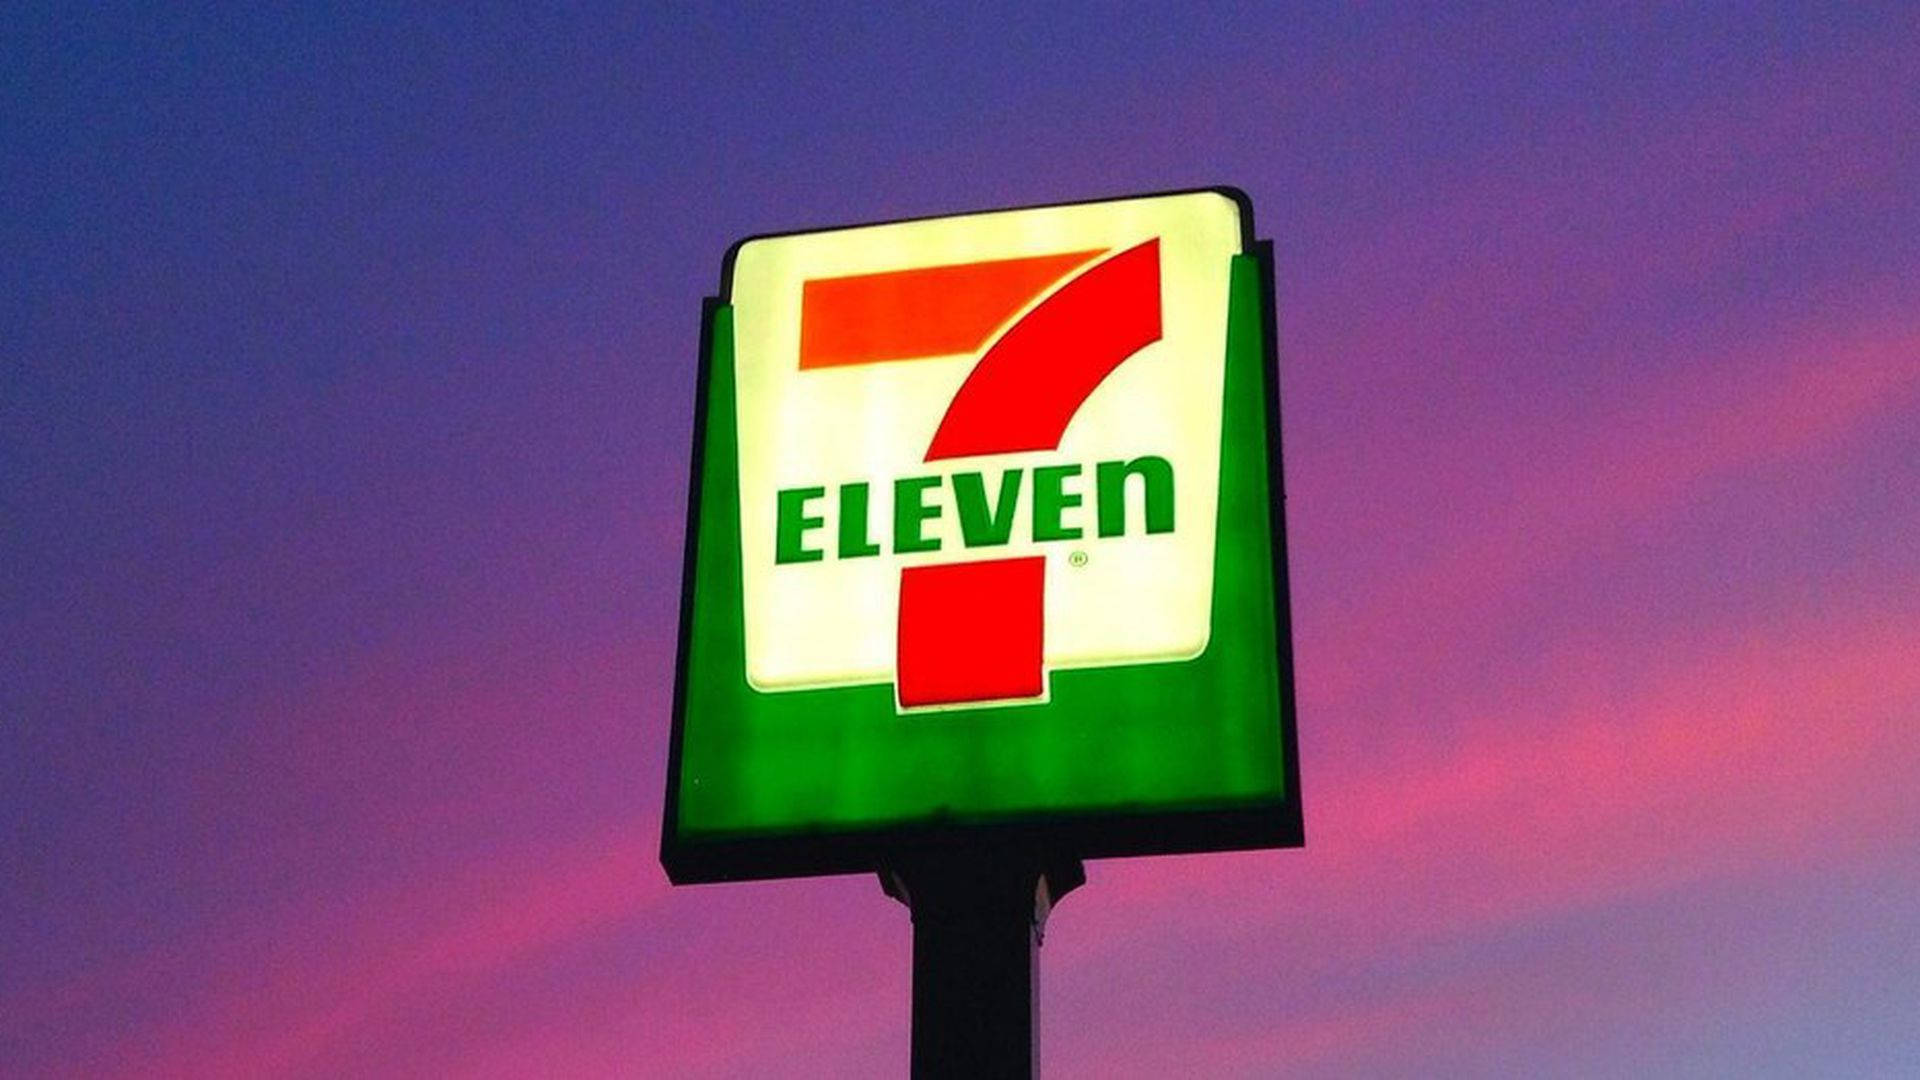 7 Eleven In Purple Skies Background